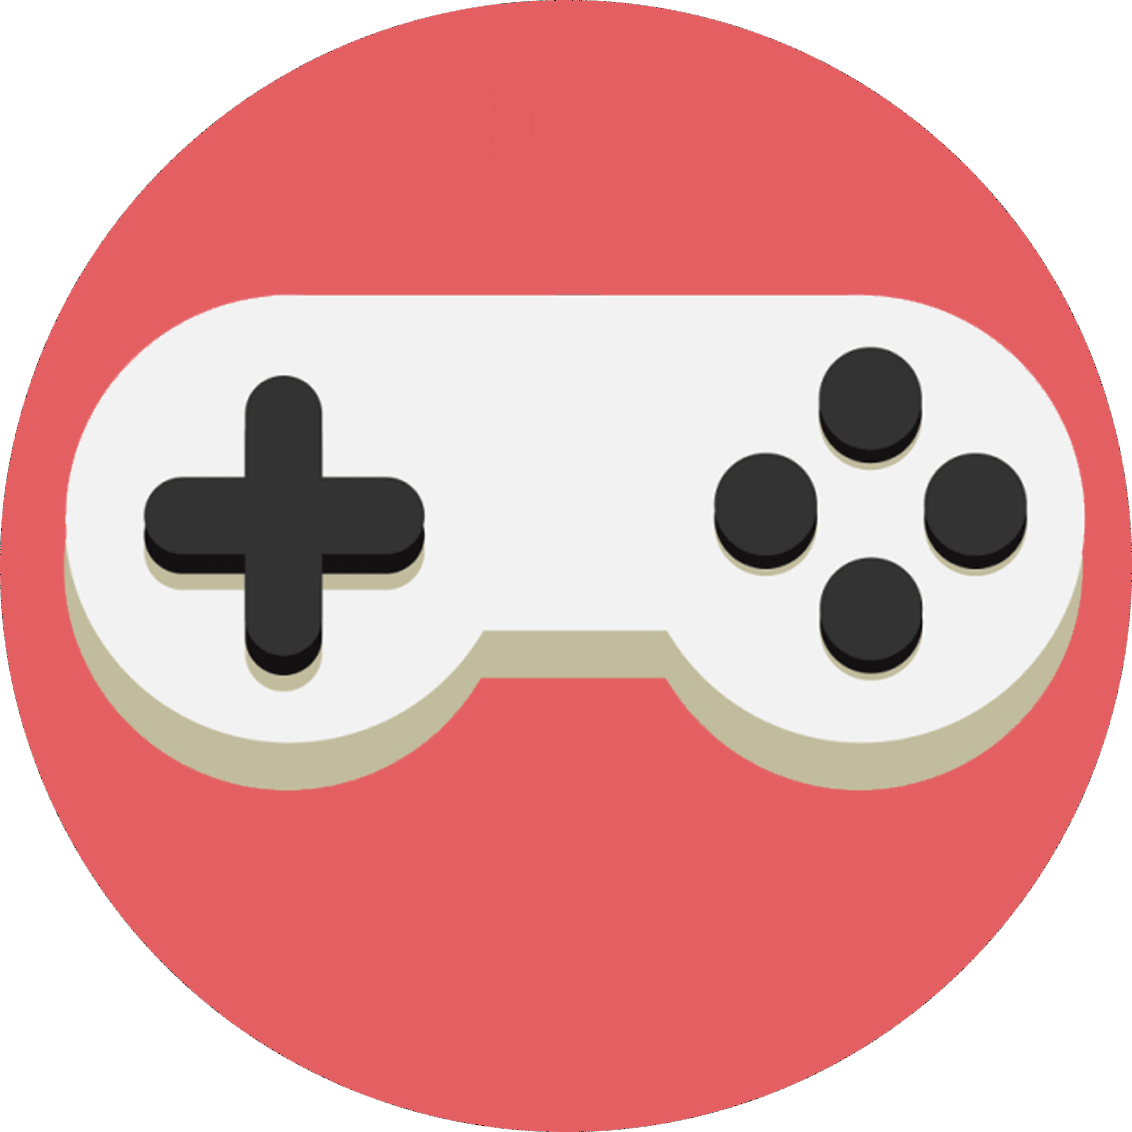 game development club logo